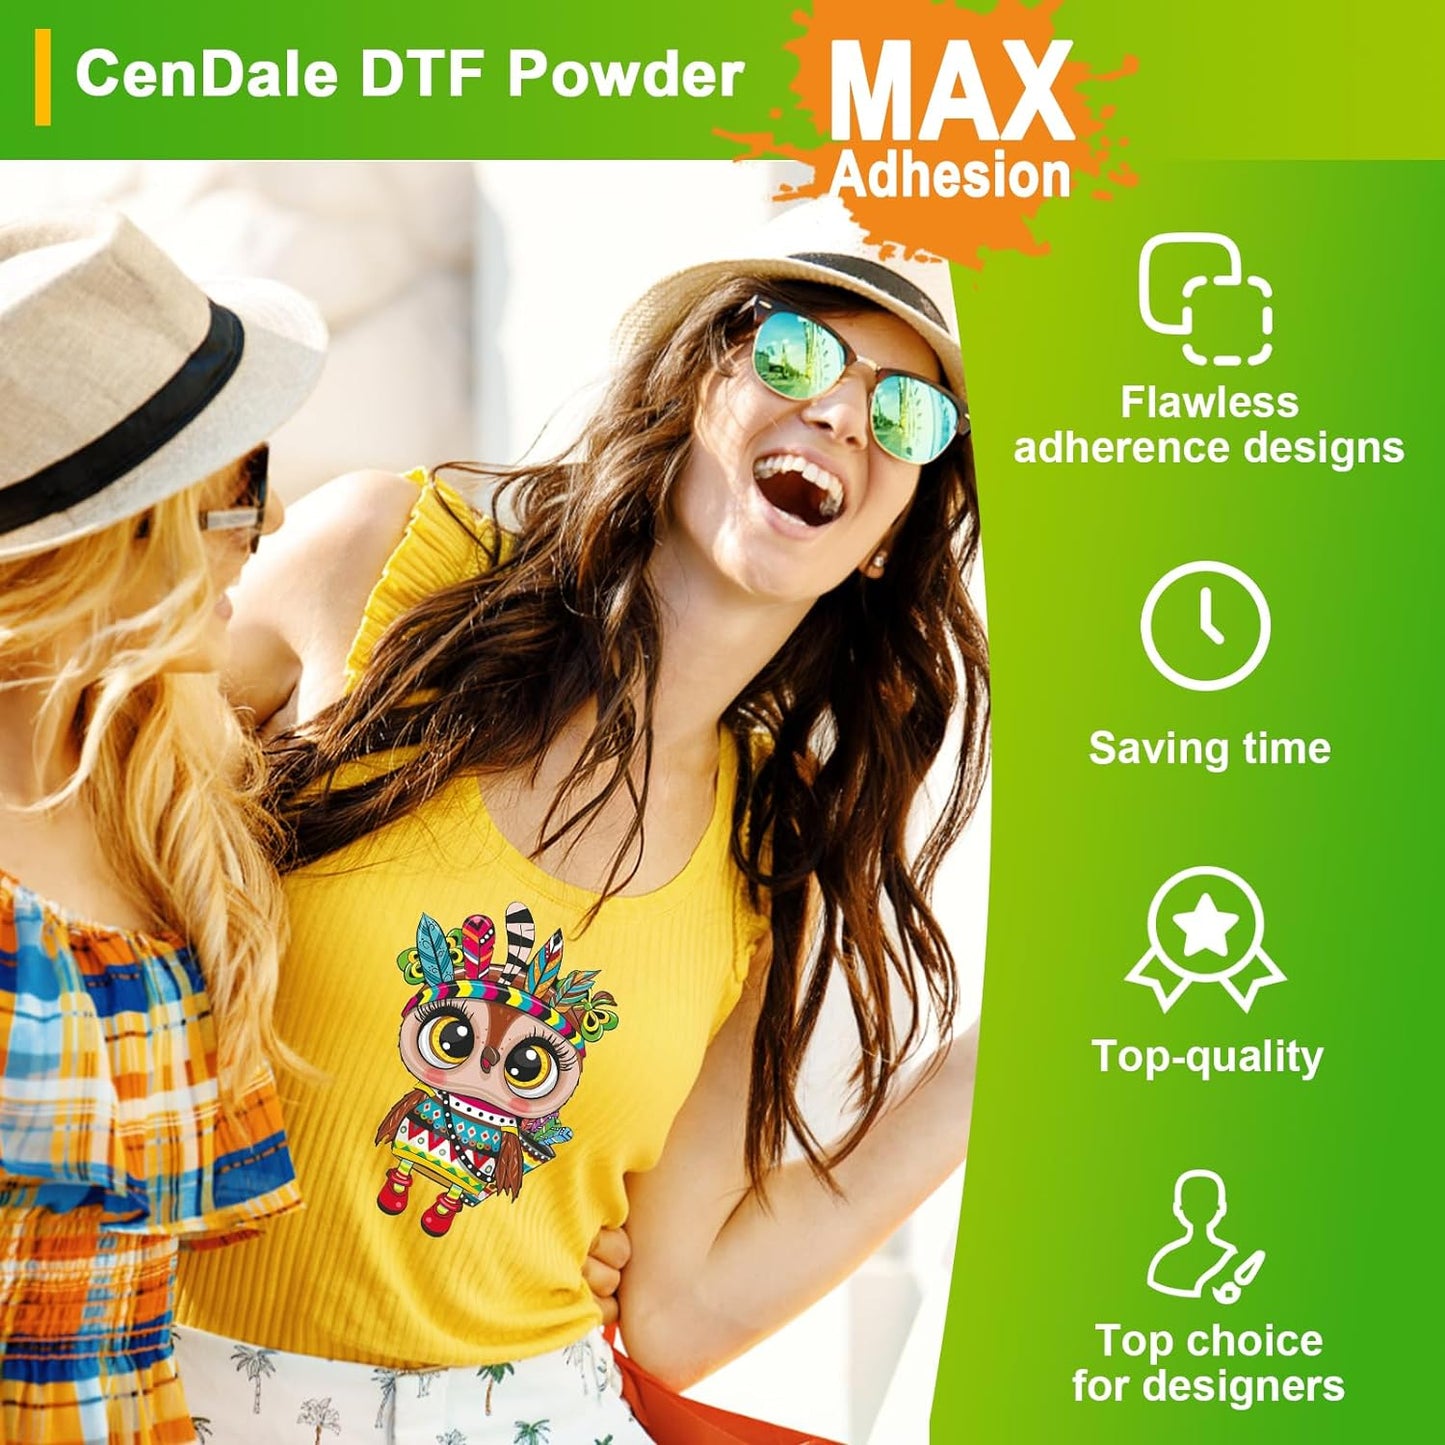 CenDale DTF Powder 1000g - White Max Adhesion DTF Transfer Powder